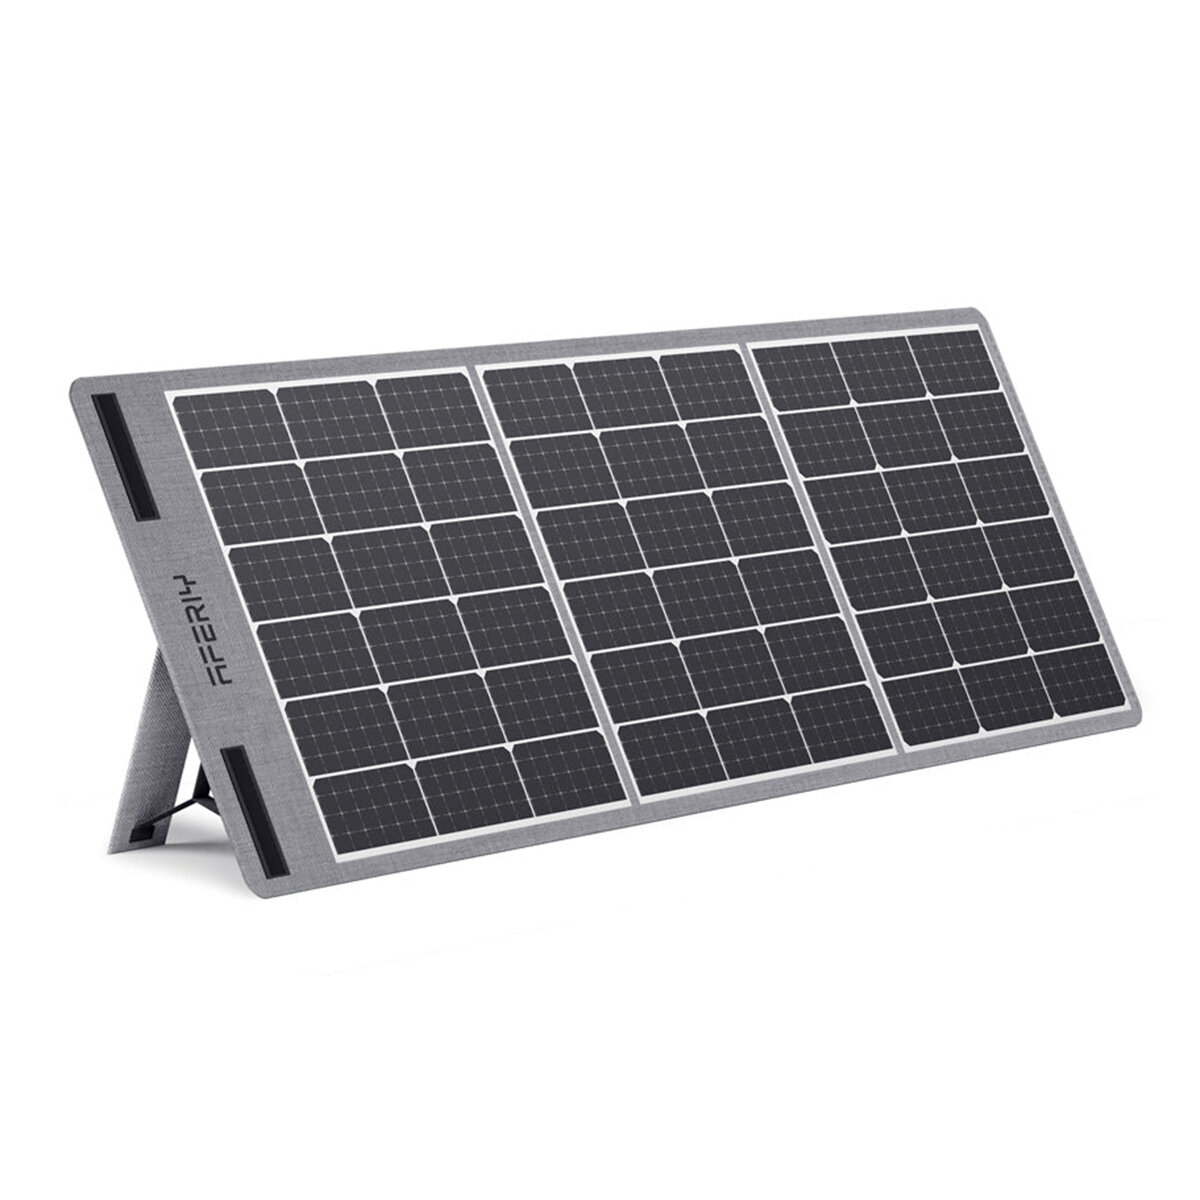 [EU Direct] Φορητά ηλιακά πάνελ AFERIY 100 watt Φορητό μονοκρυσταλλικό φορτιστή ηλιακής ενέργειας με θύρες USB και DC Αδιάβροχο πάνελ ηλιακής ενέργειας IP65 για εξωτερική κατασκήνωση σετρί